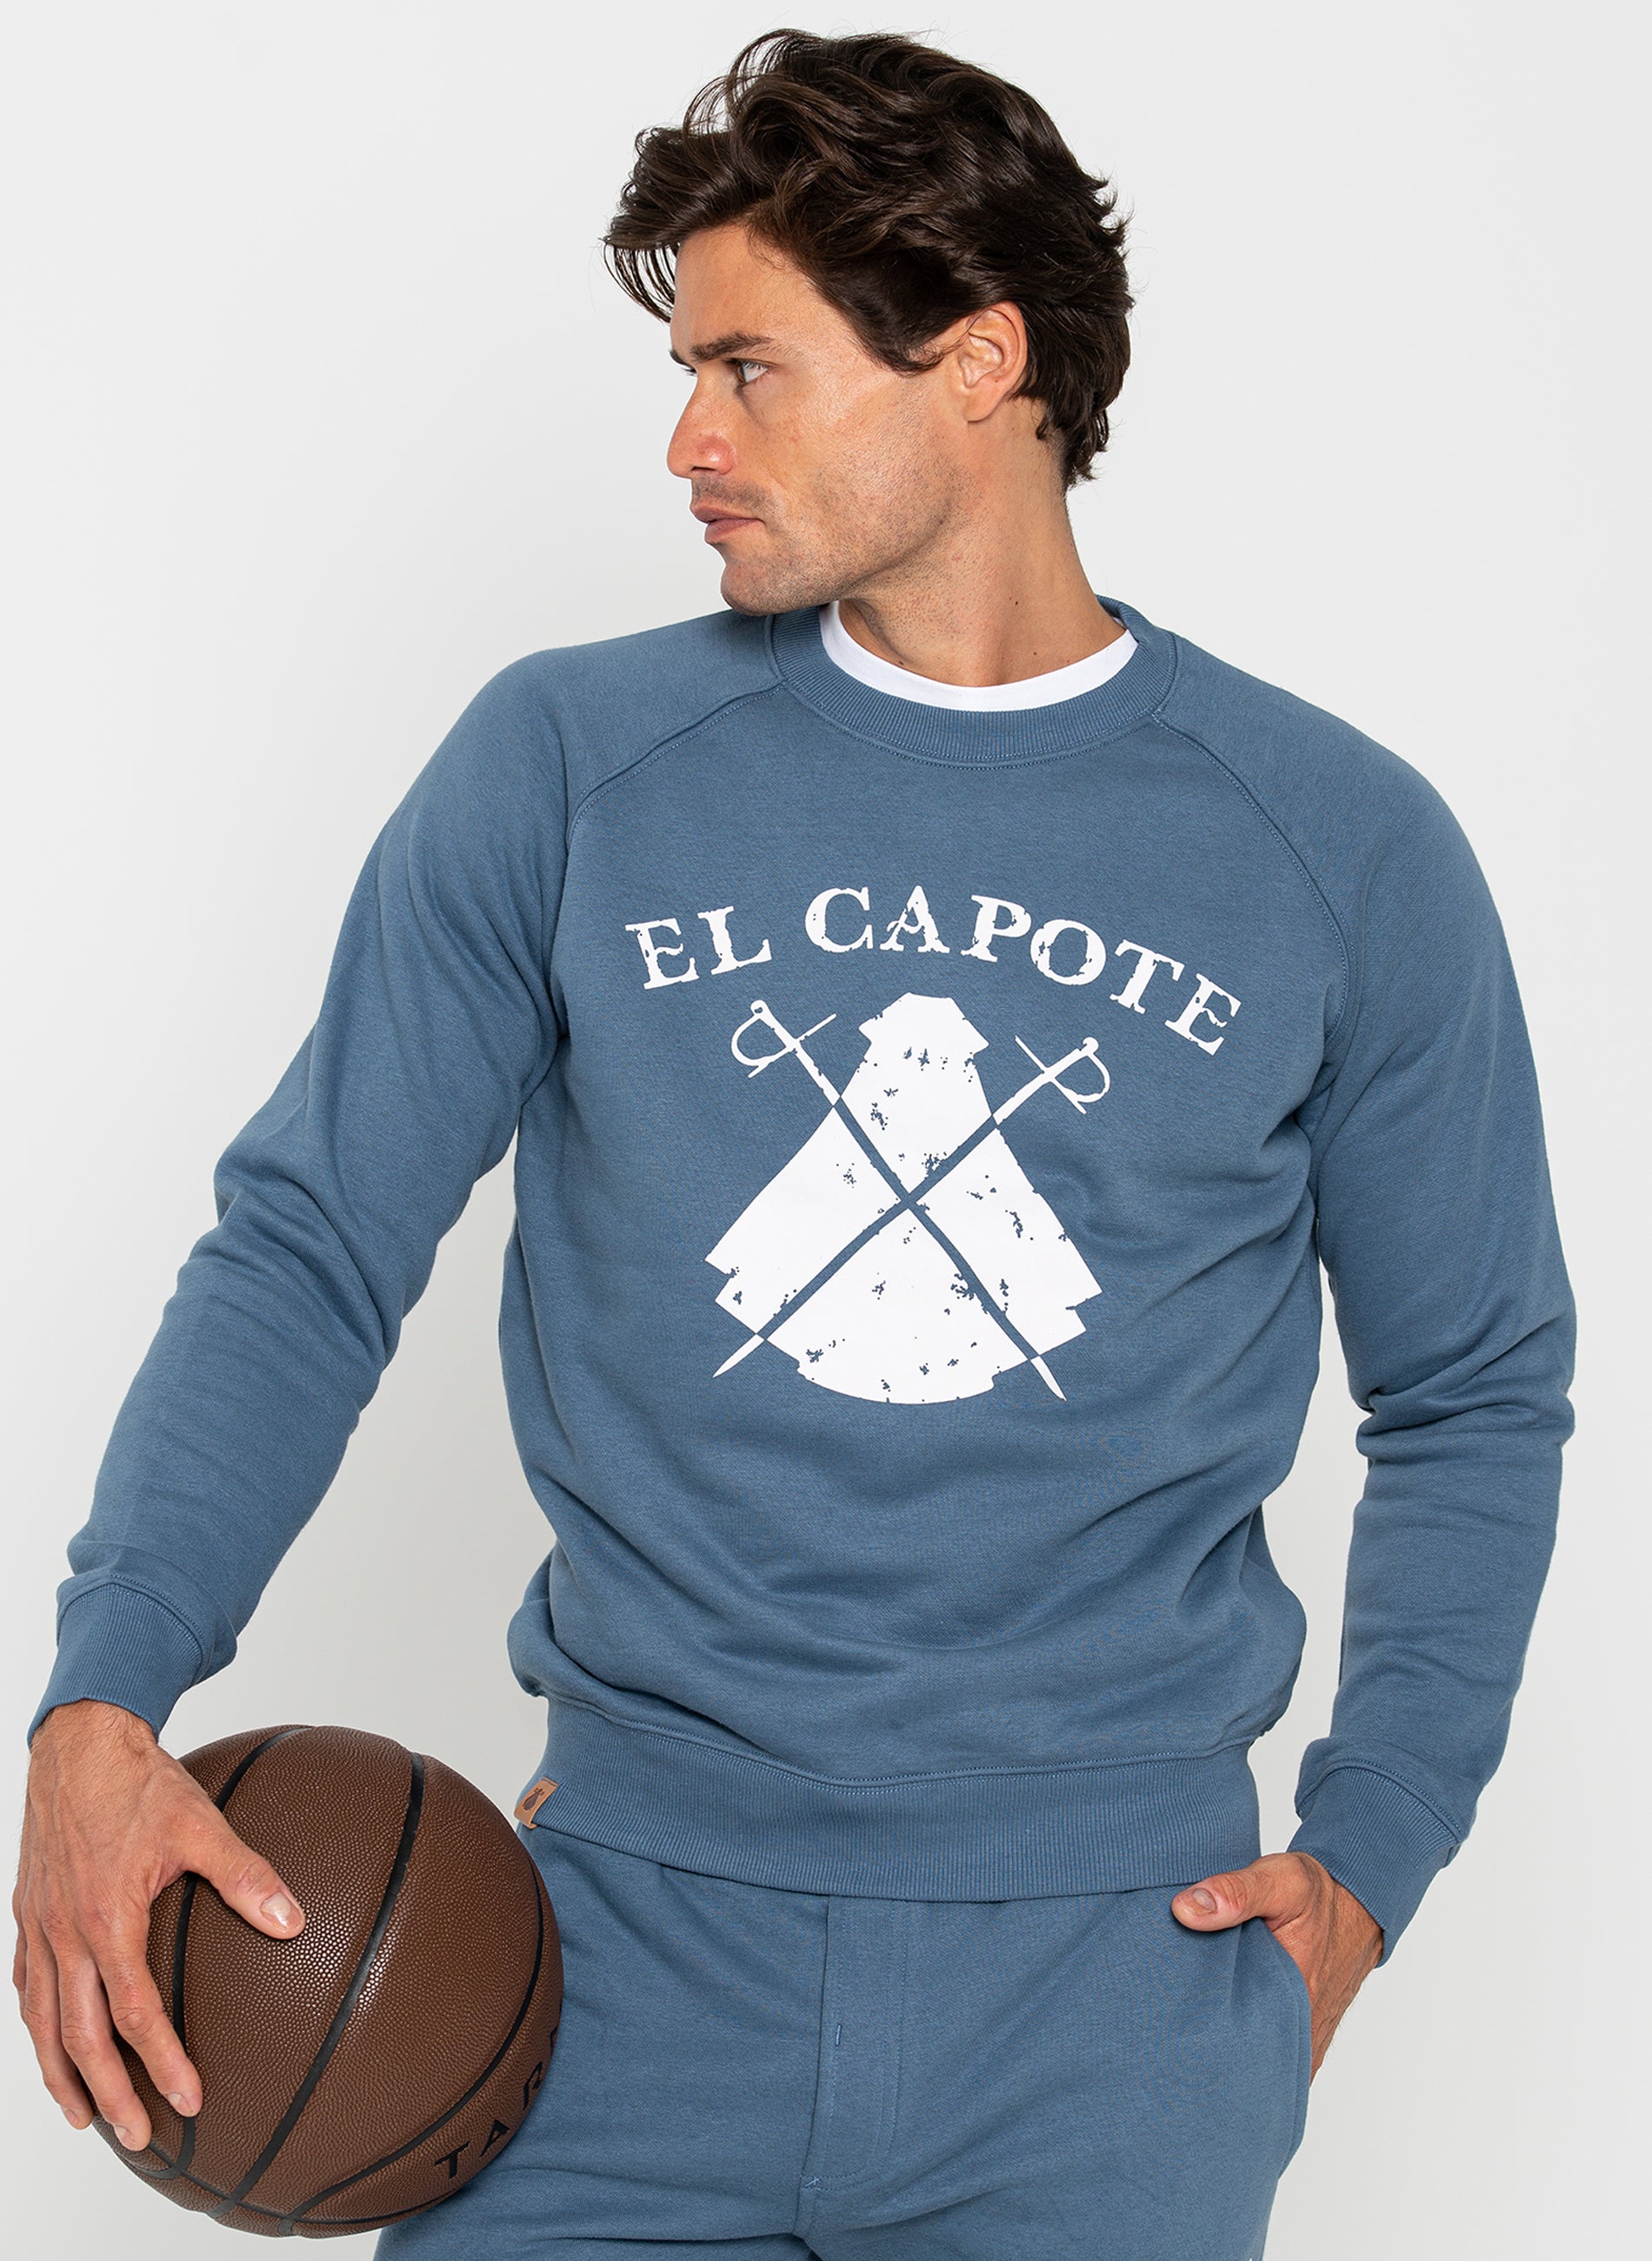 Espadrilles Homme Bleu Marine Brodées Cape Rose – El Capote